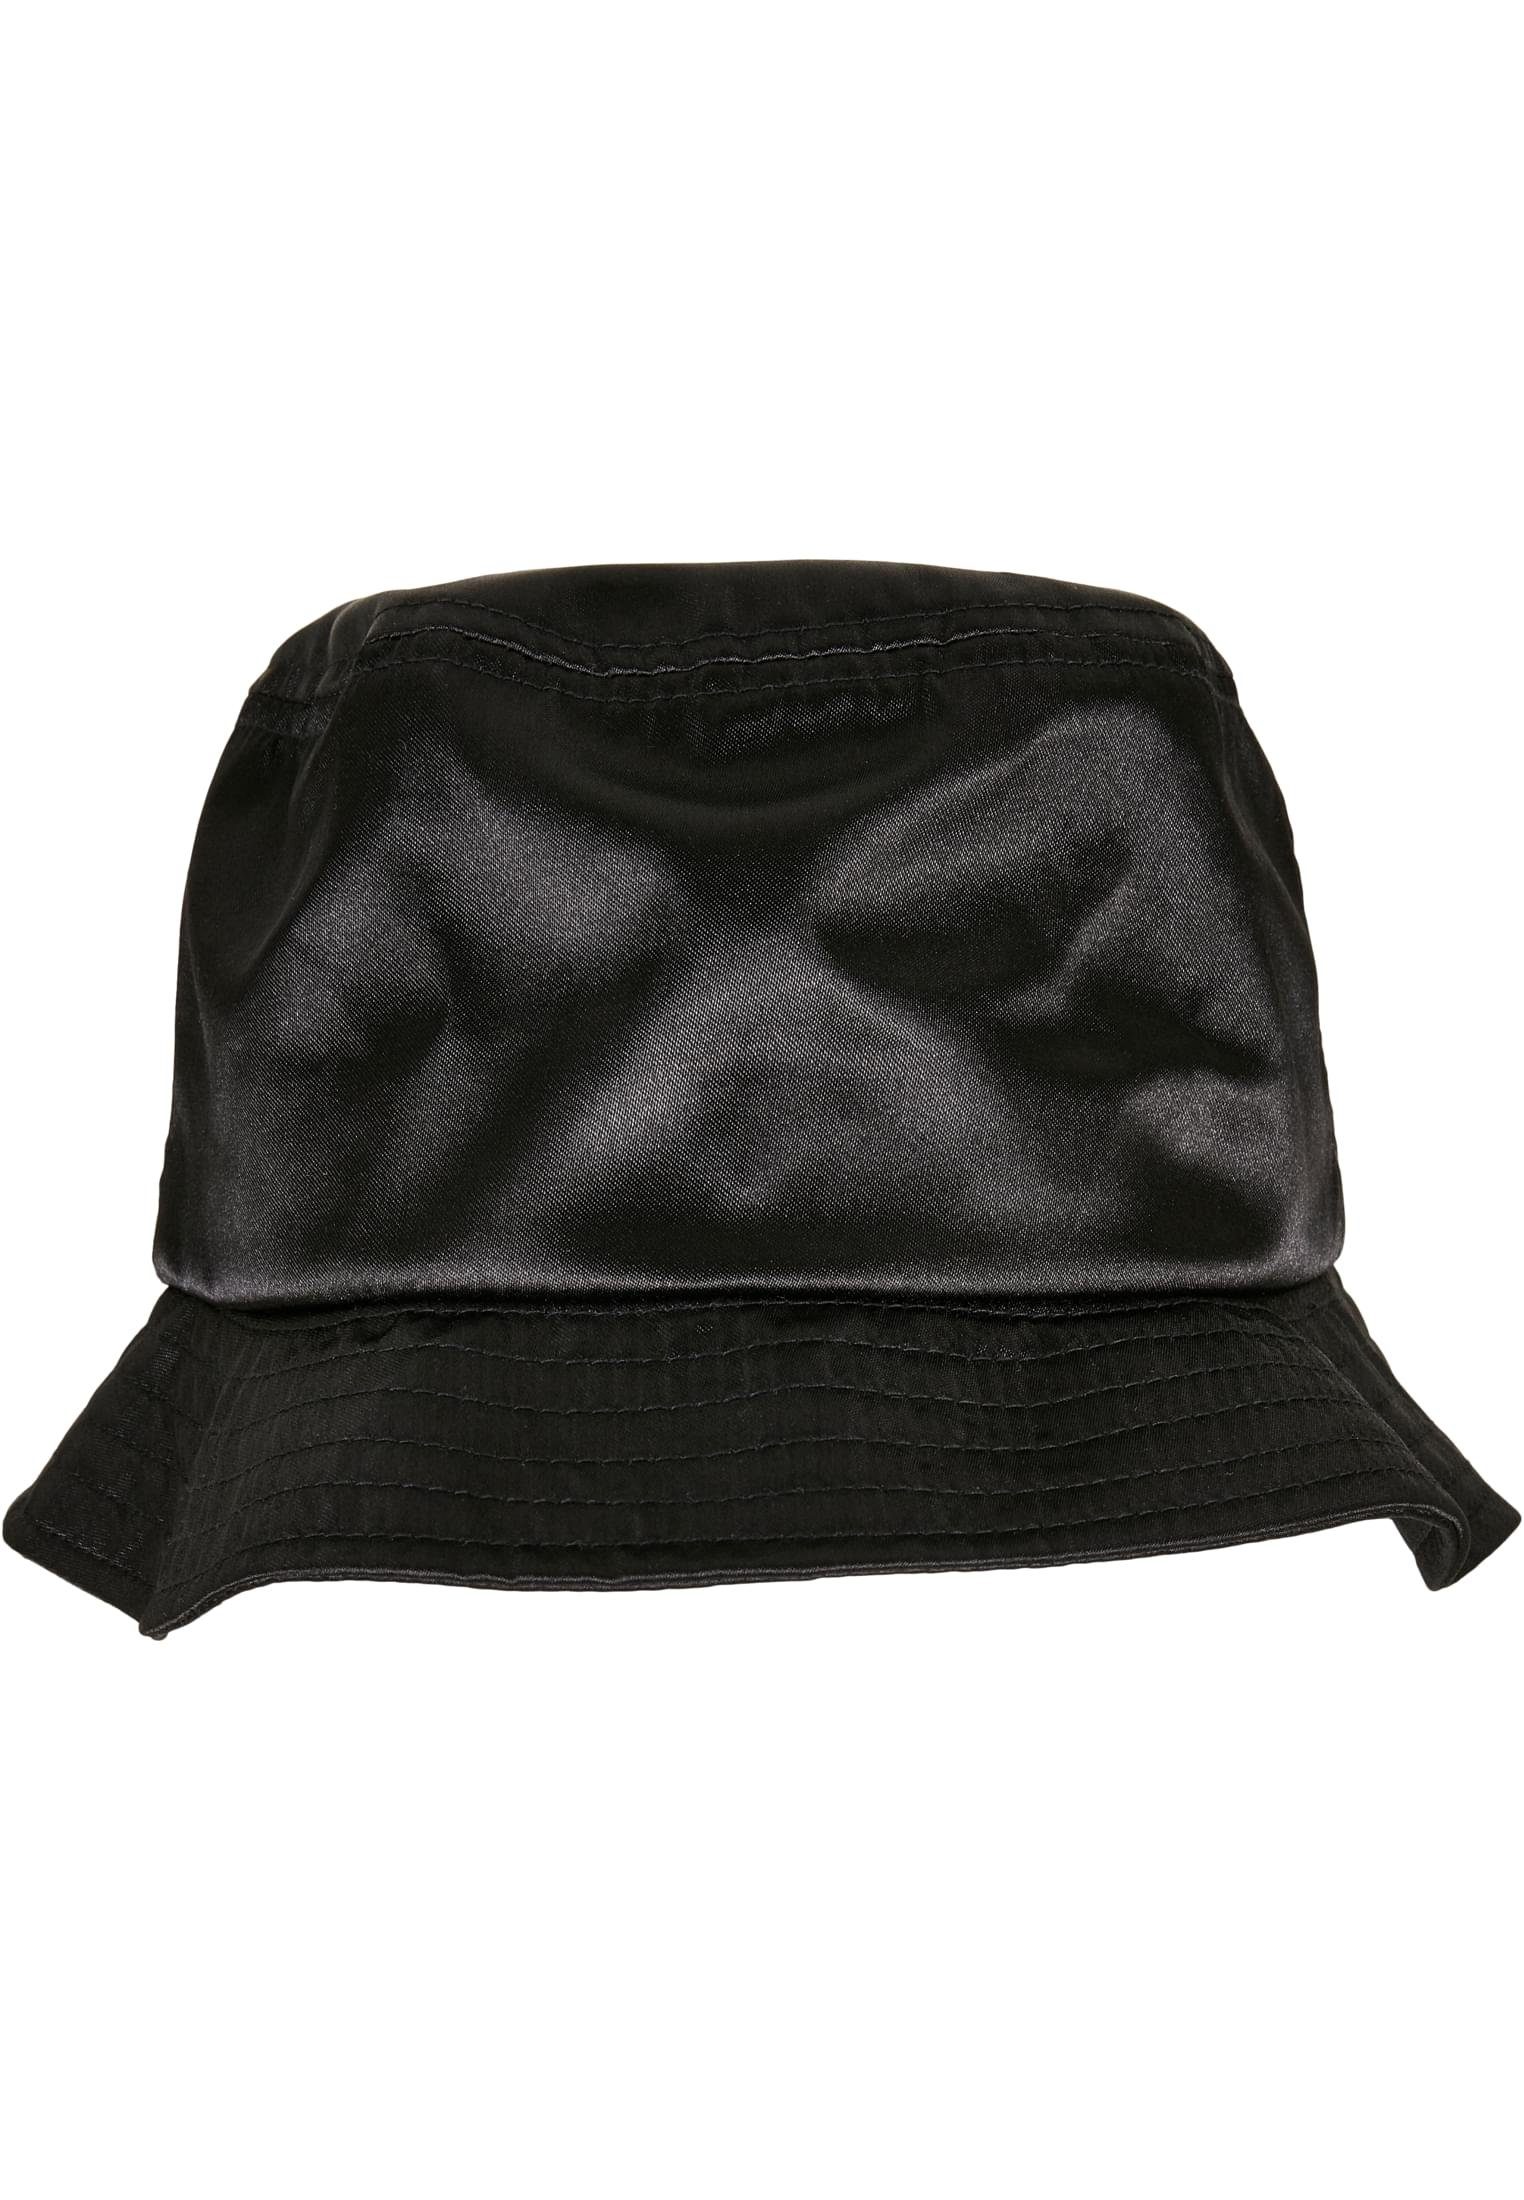 Hat Bucket Trucker Unisex URBAN black Cap Satin CLASSICS